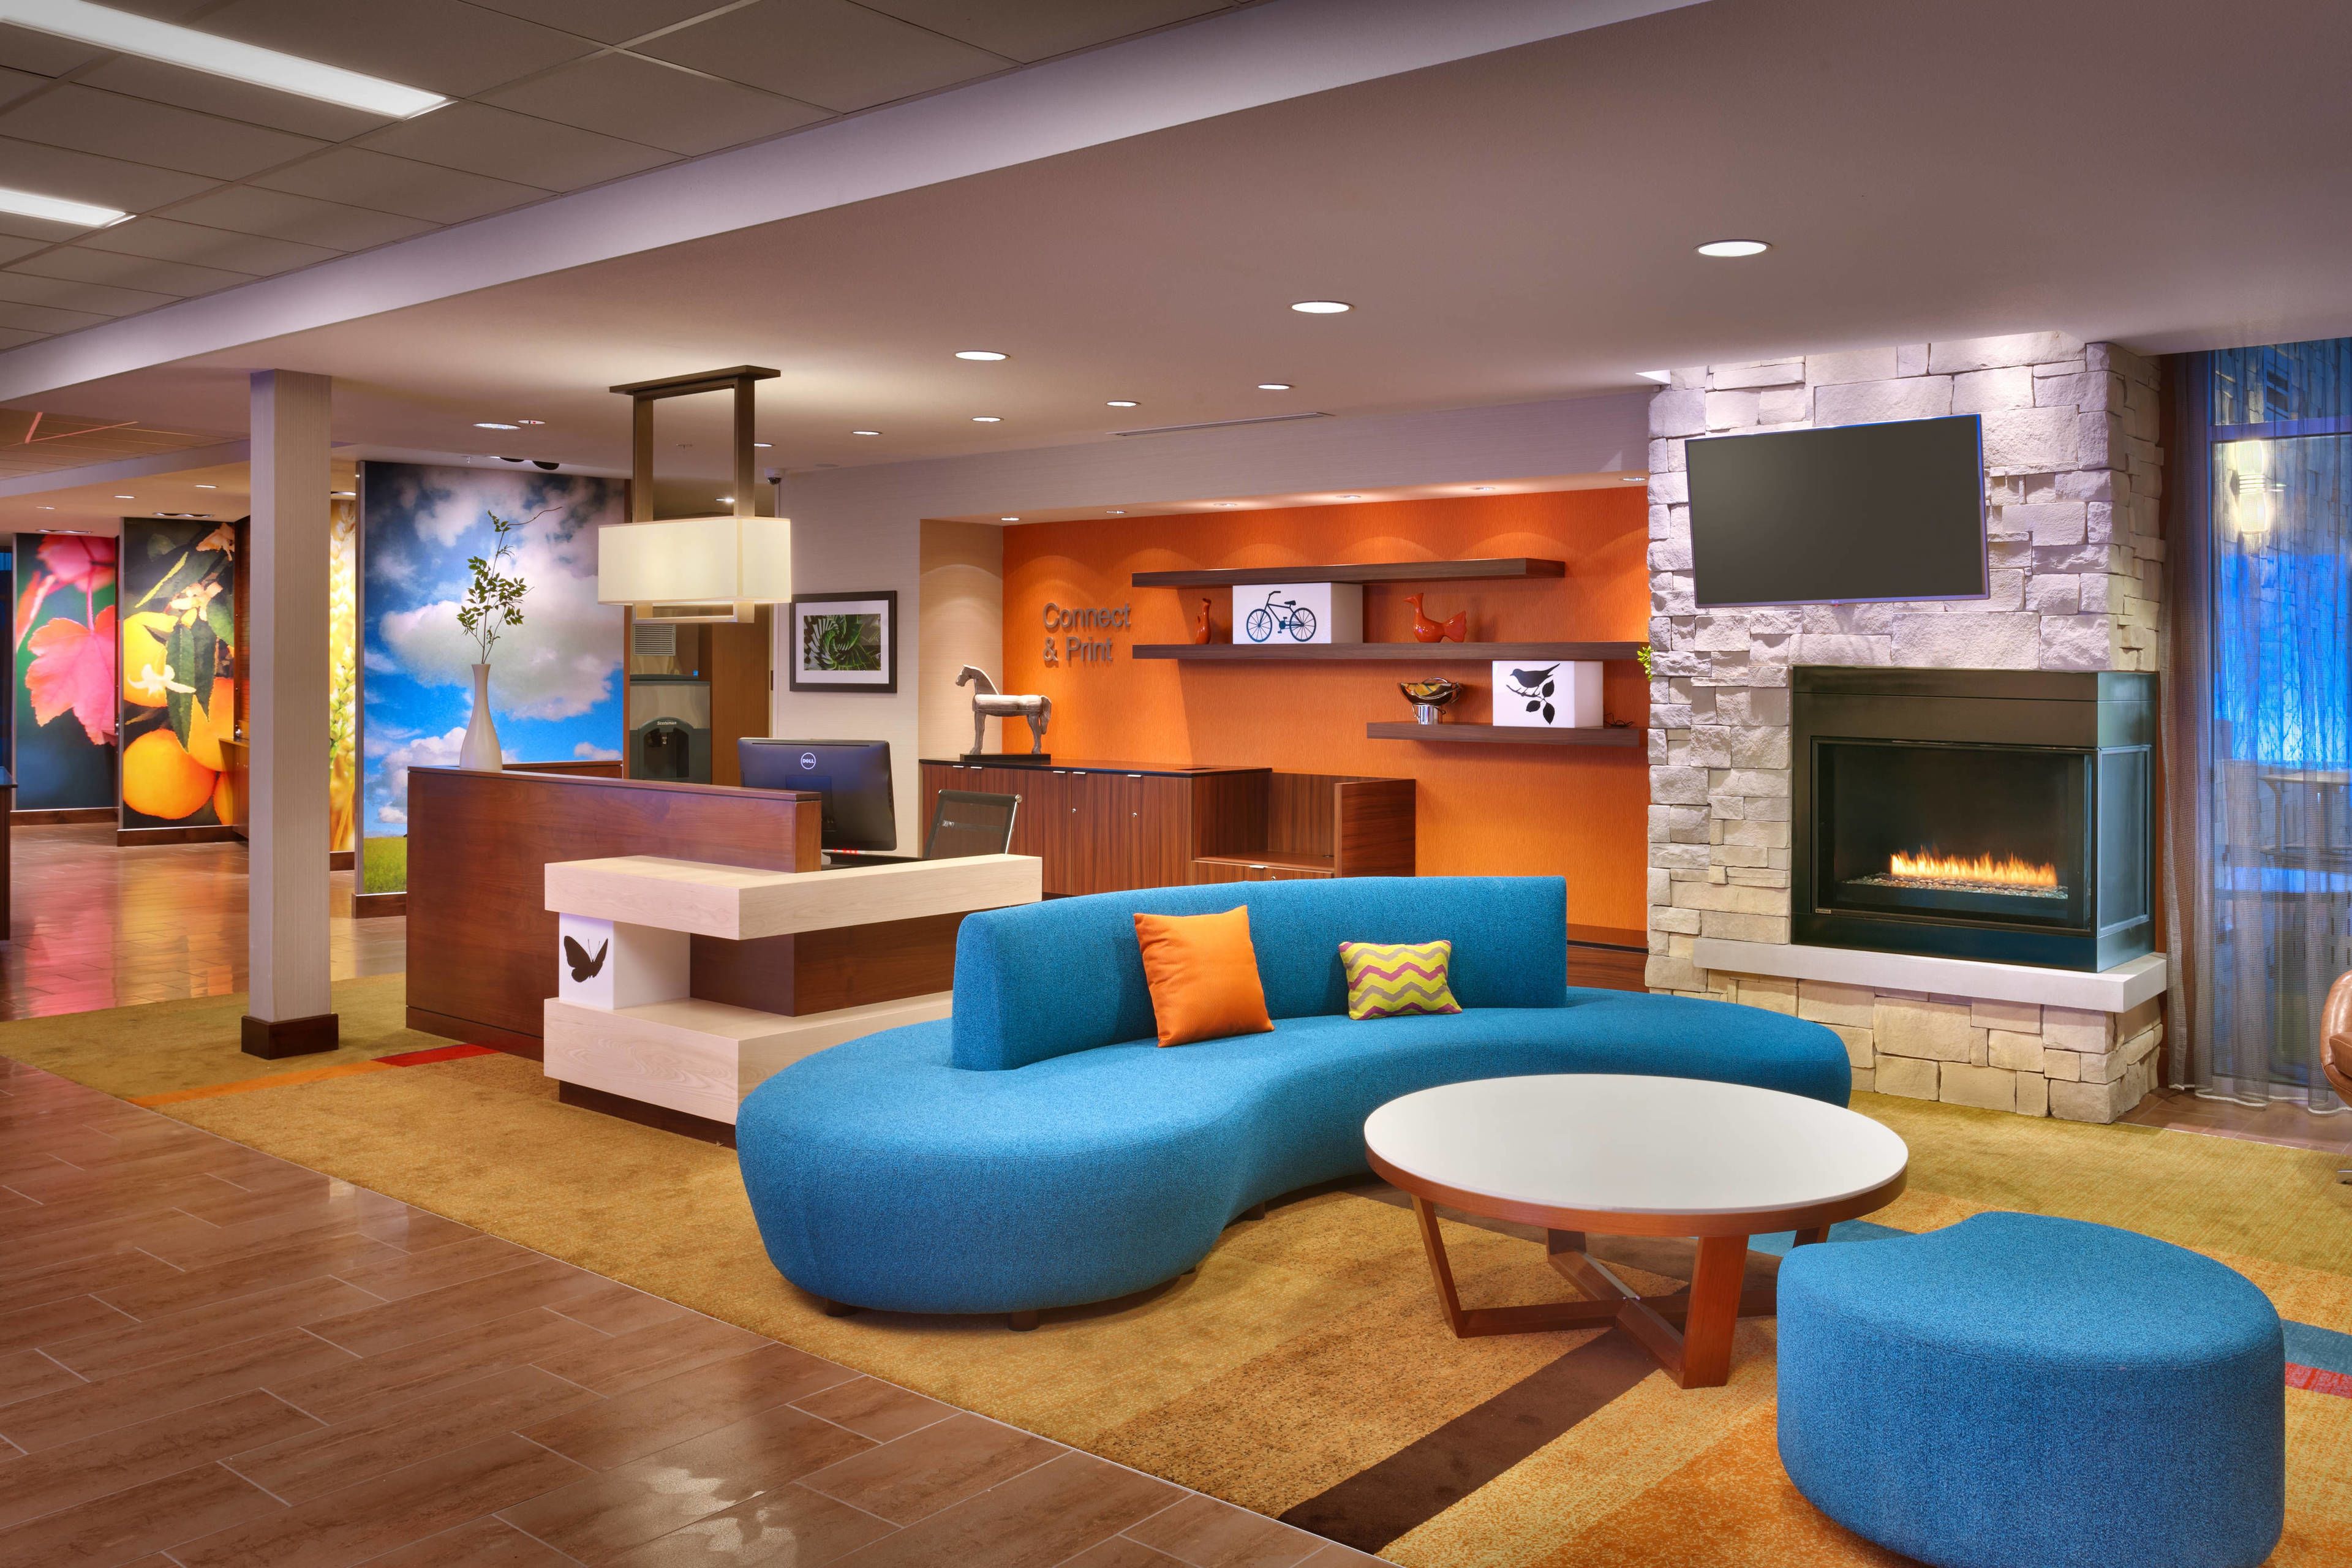 Fairfield Inn & Suites Salt Lake City Midvale